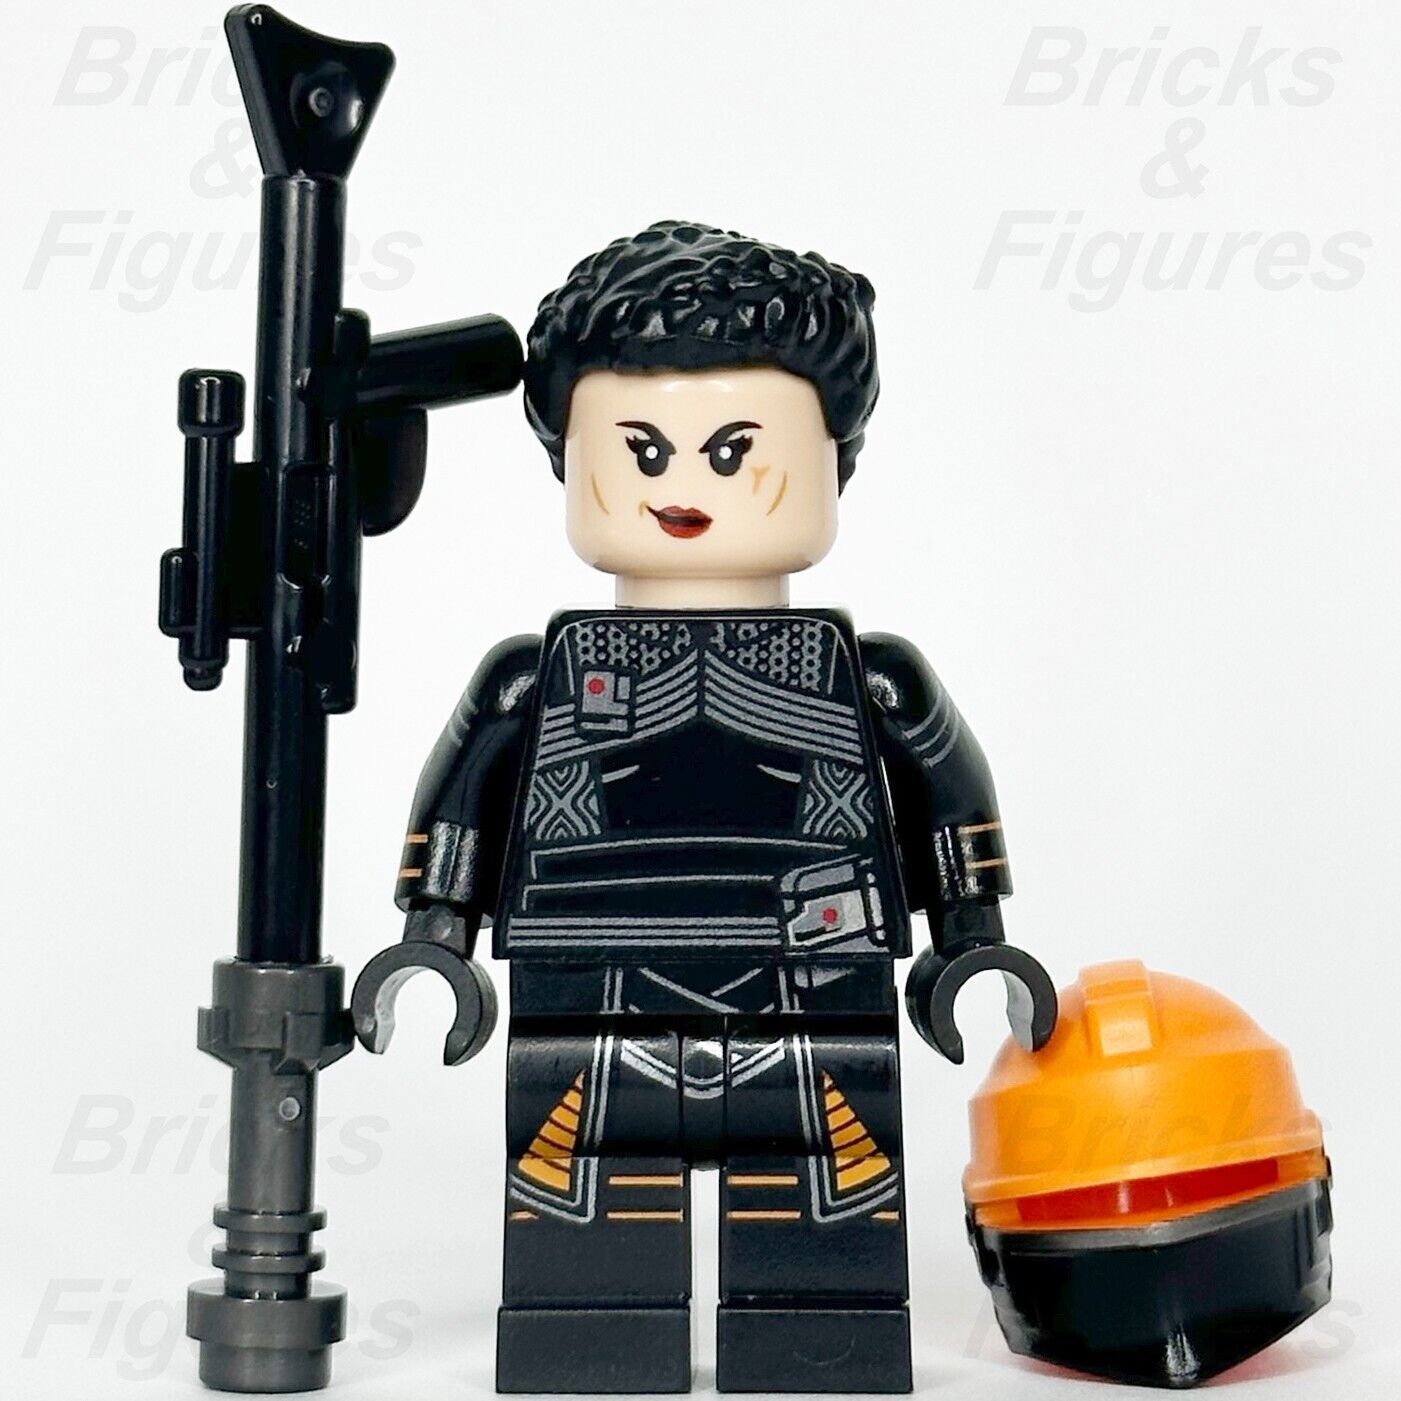 LEGO Star Wars Fennec Shand Minifigure Assassin The Mandalorian 75315 sw1159 2